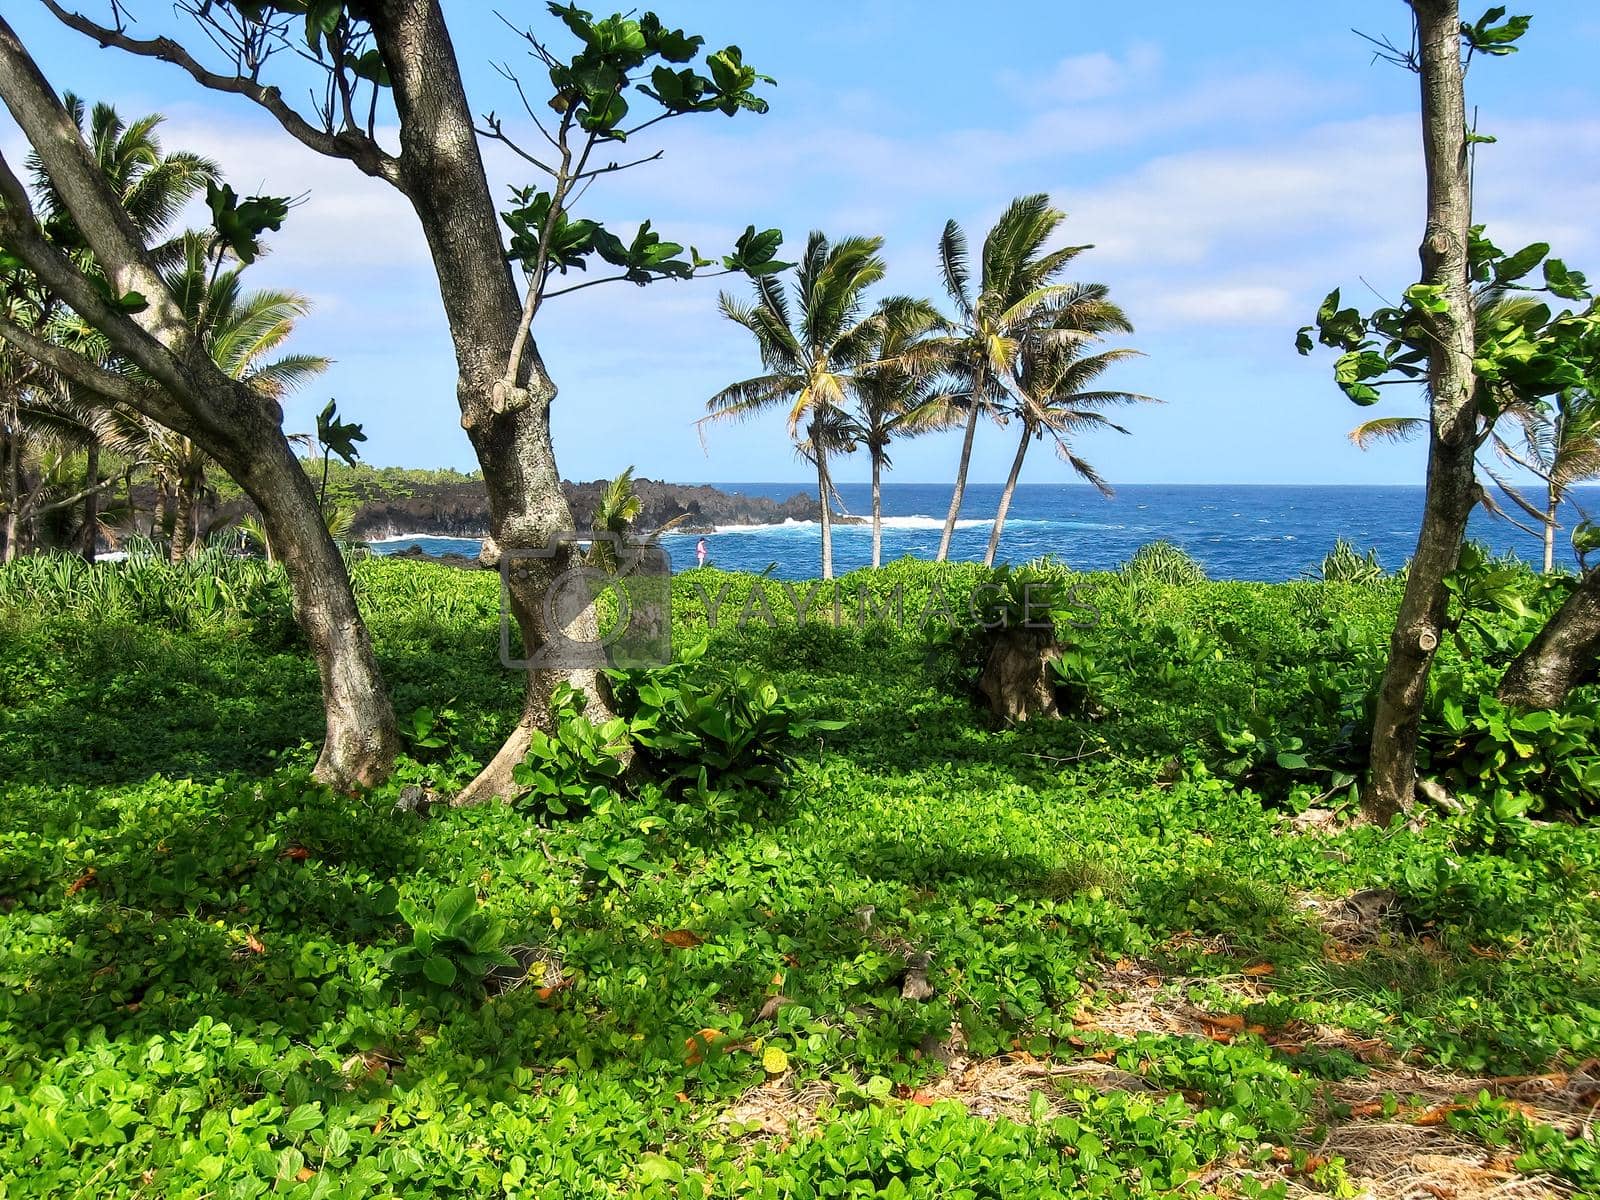 Royalty free image of Lush Vegetation and Palm Trees Grow Near the Ocean at Waianapanapa State Park in Hana, Hawaii by markvandam